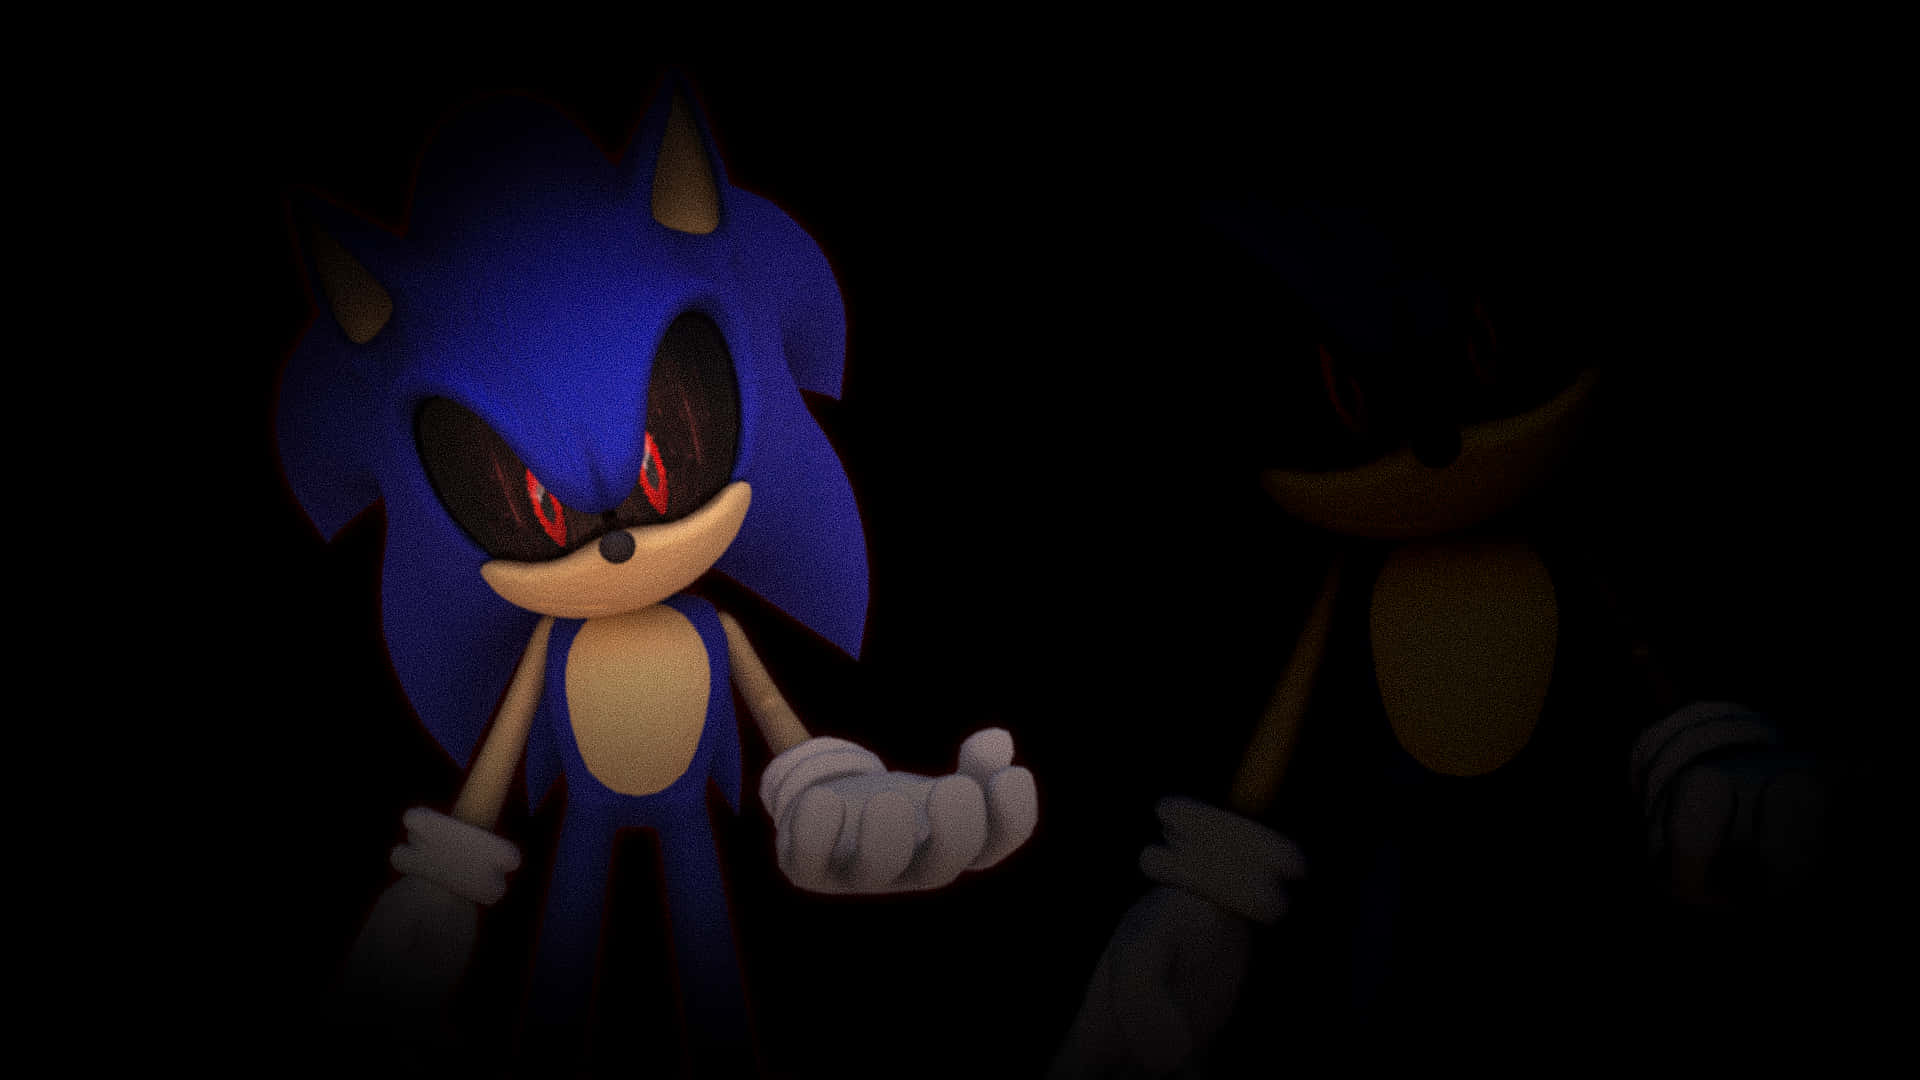 Bliv med i sjov, som Sonic leder efter sine venner i det uhyggelige skov! Wallpaper